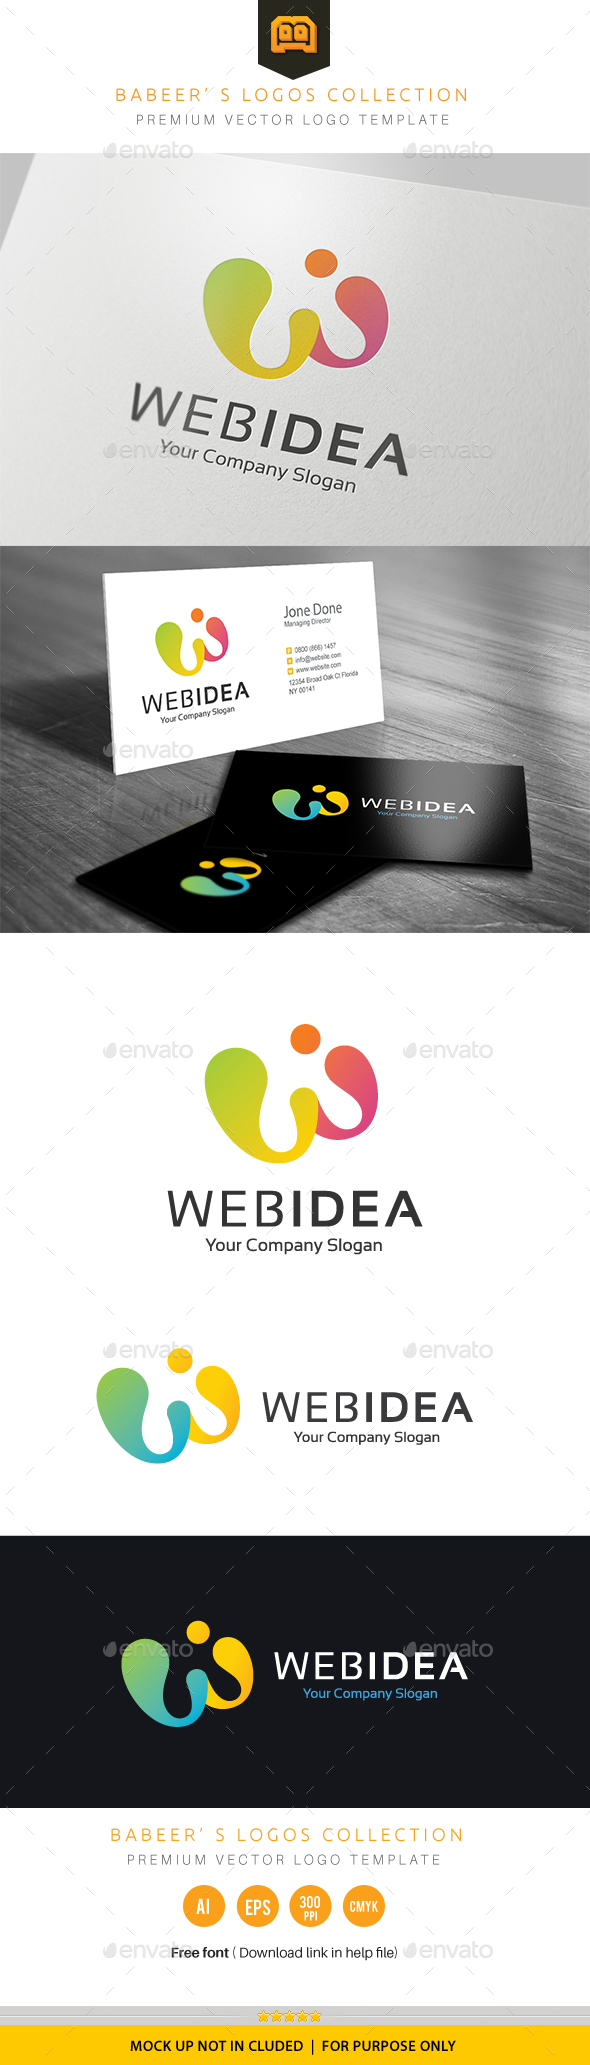 Web Idea logo